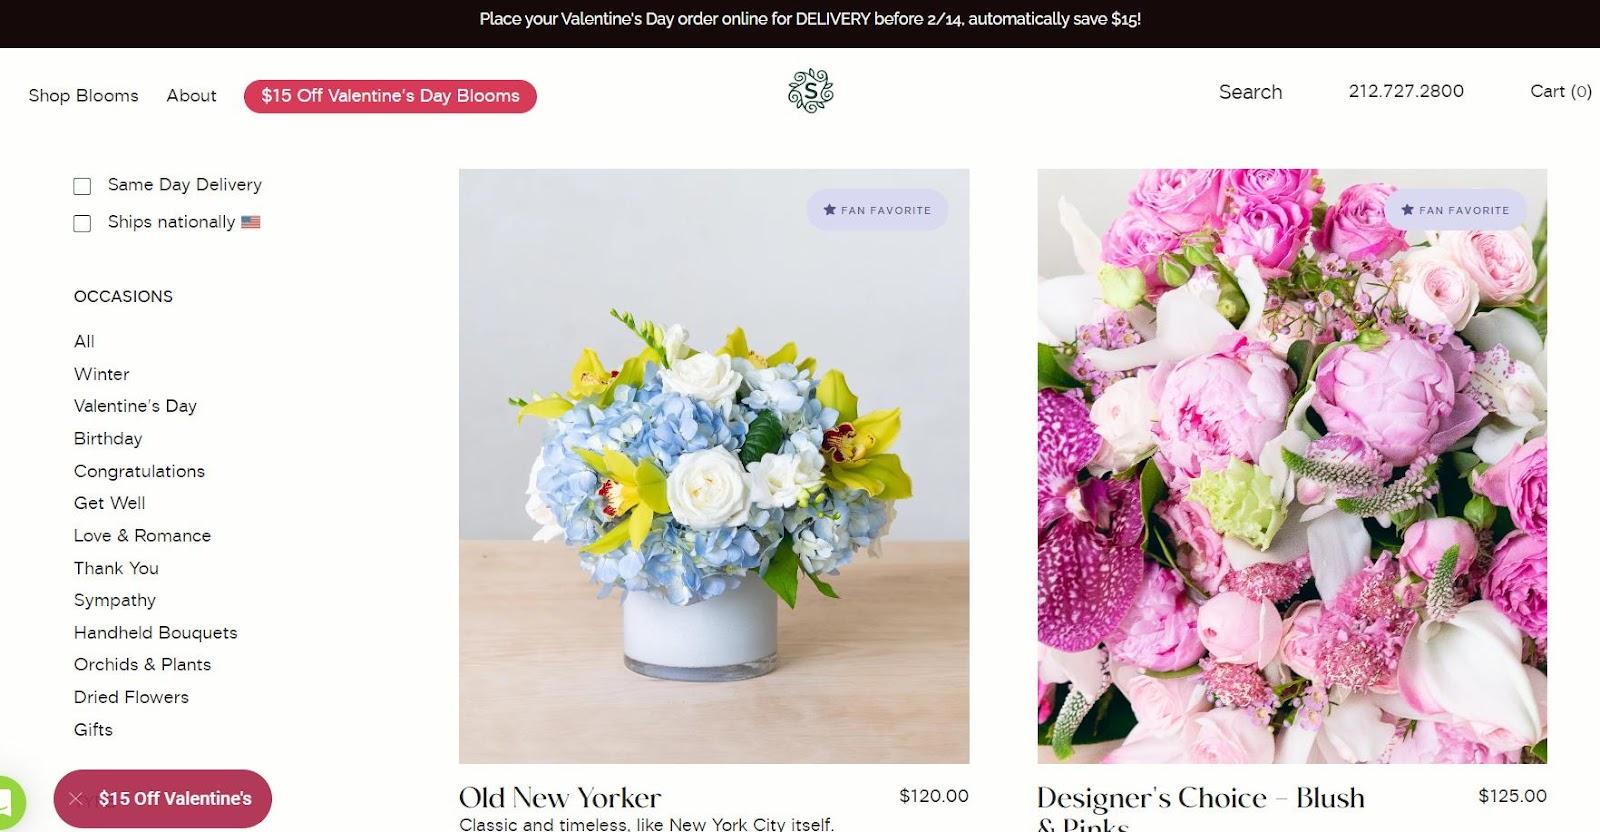  Best florist websites — design example from Scotts Flowers.